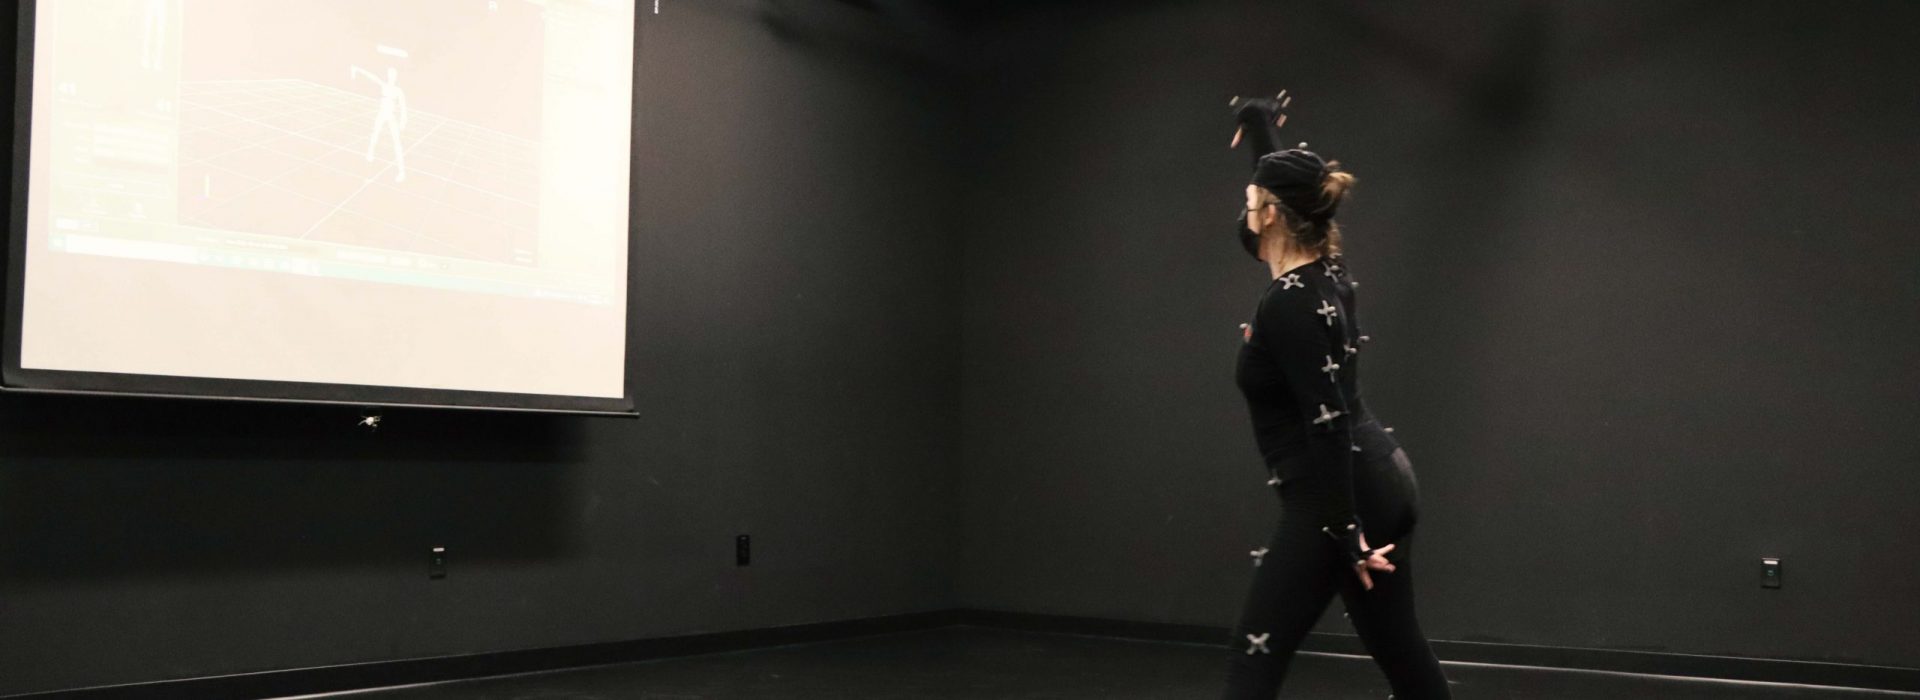 Meira Tompkins expertly showcasing her dancing skills through motion capture